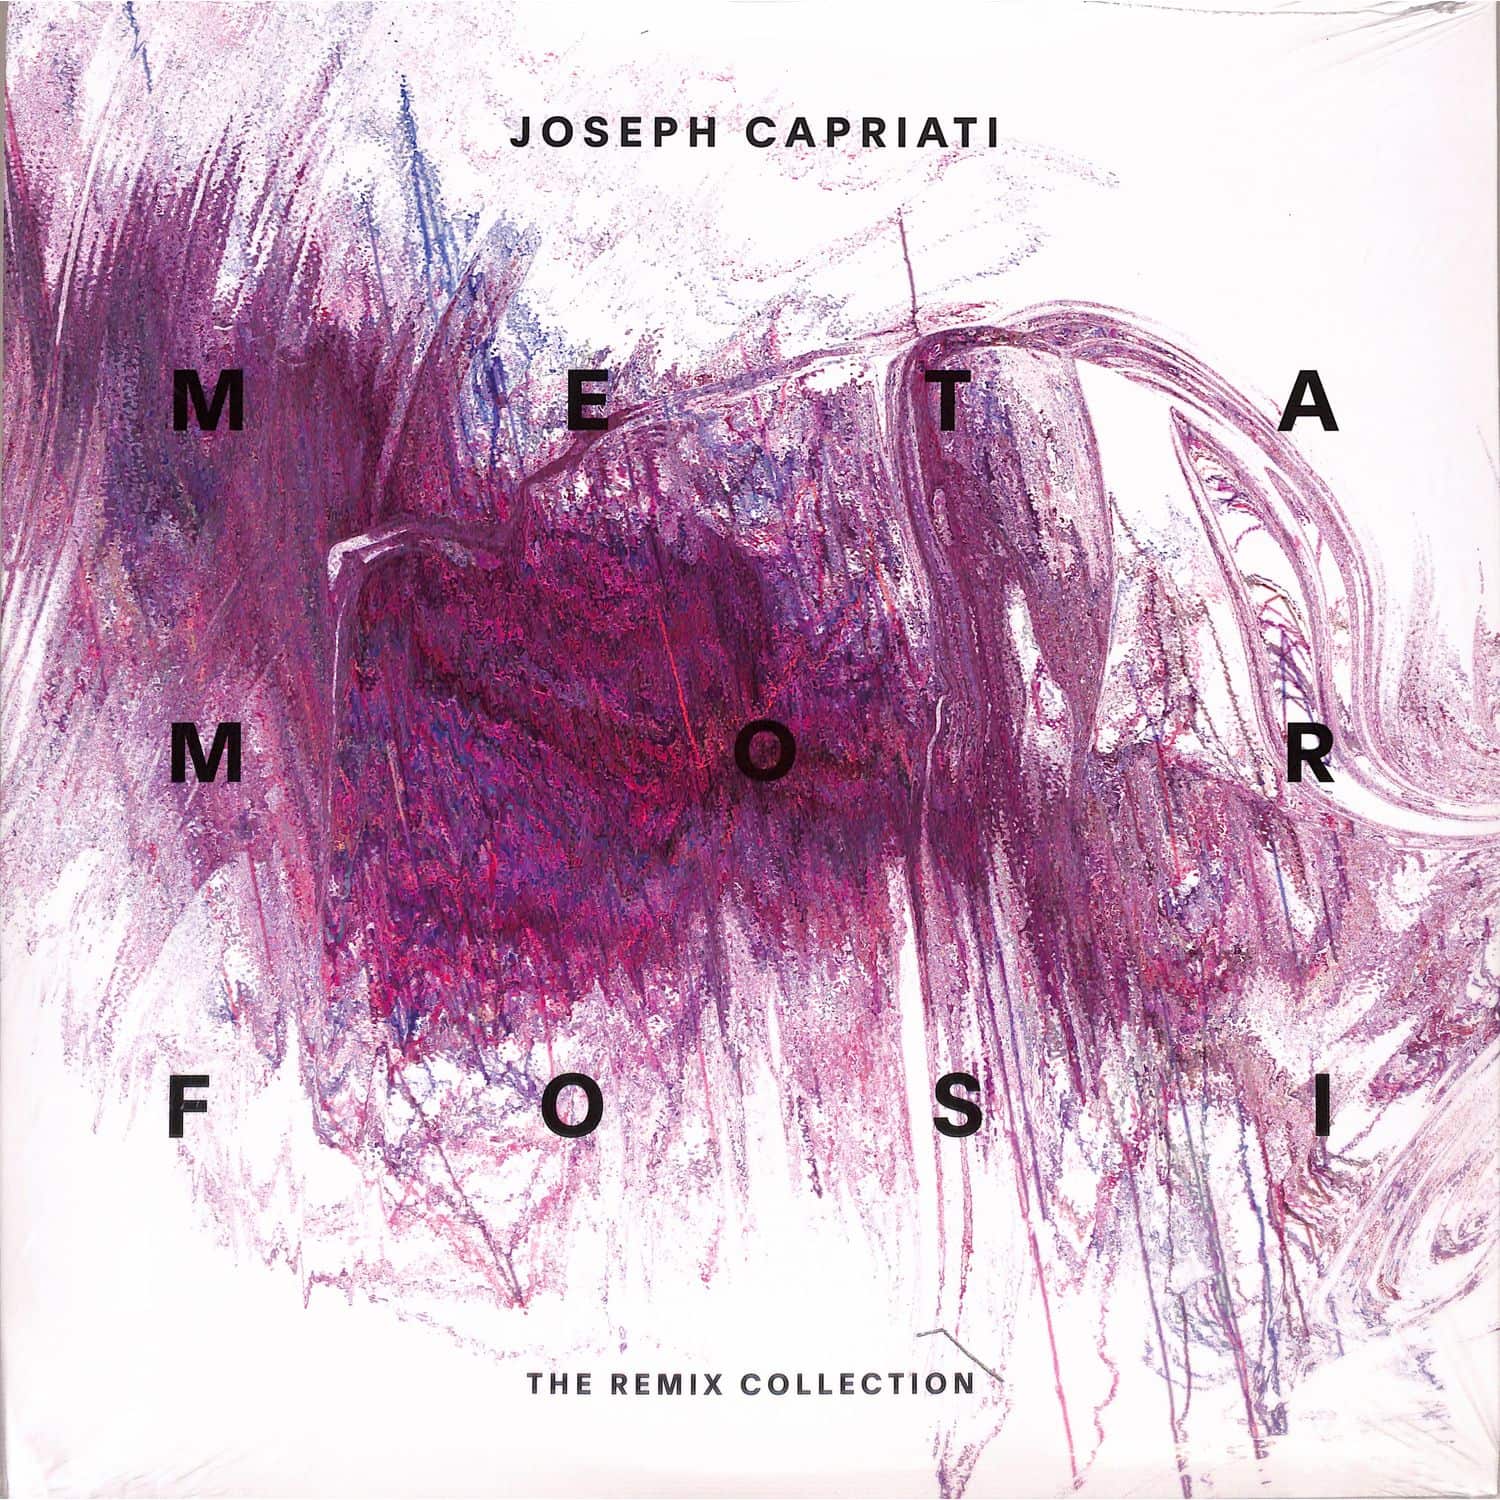 Joseph Capriati - METAMORFOSI 